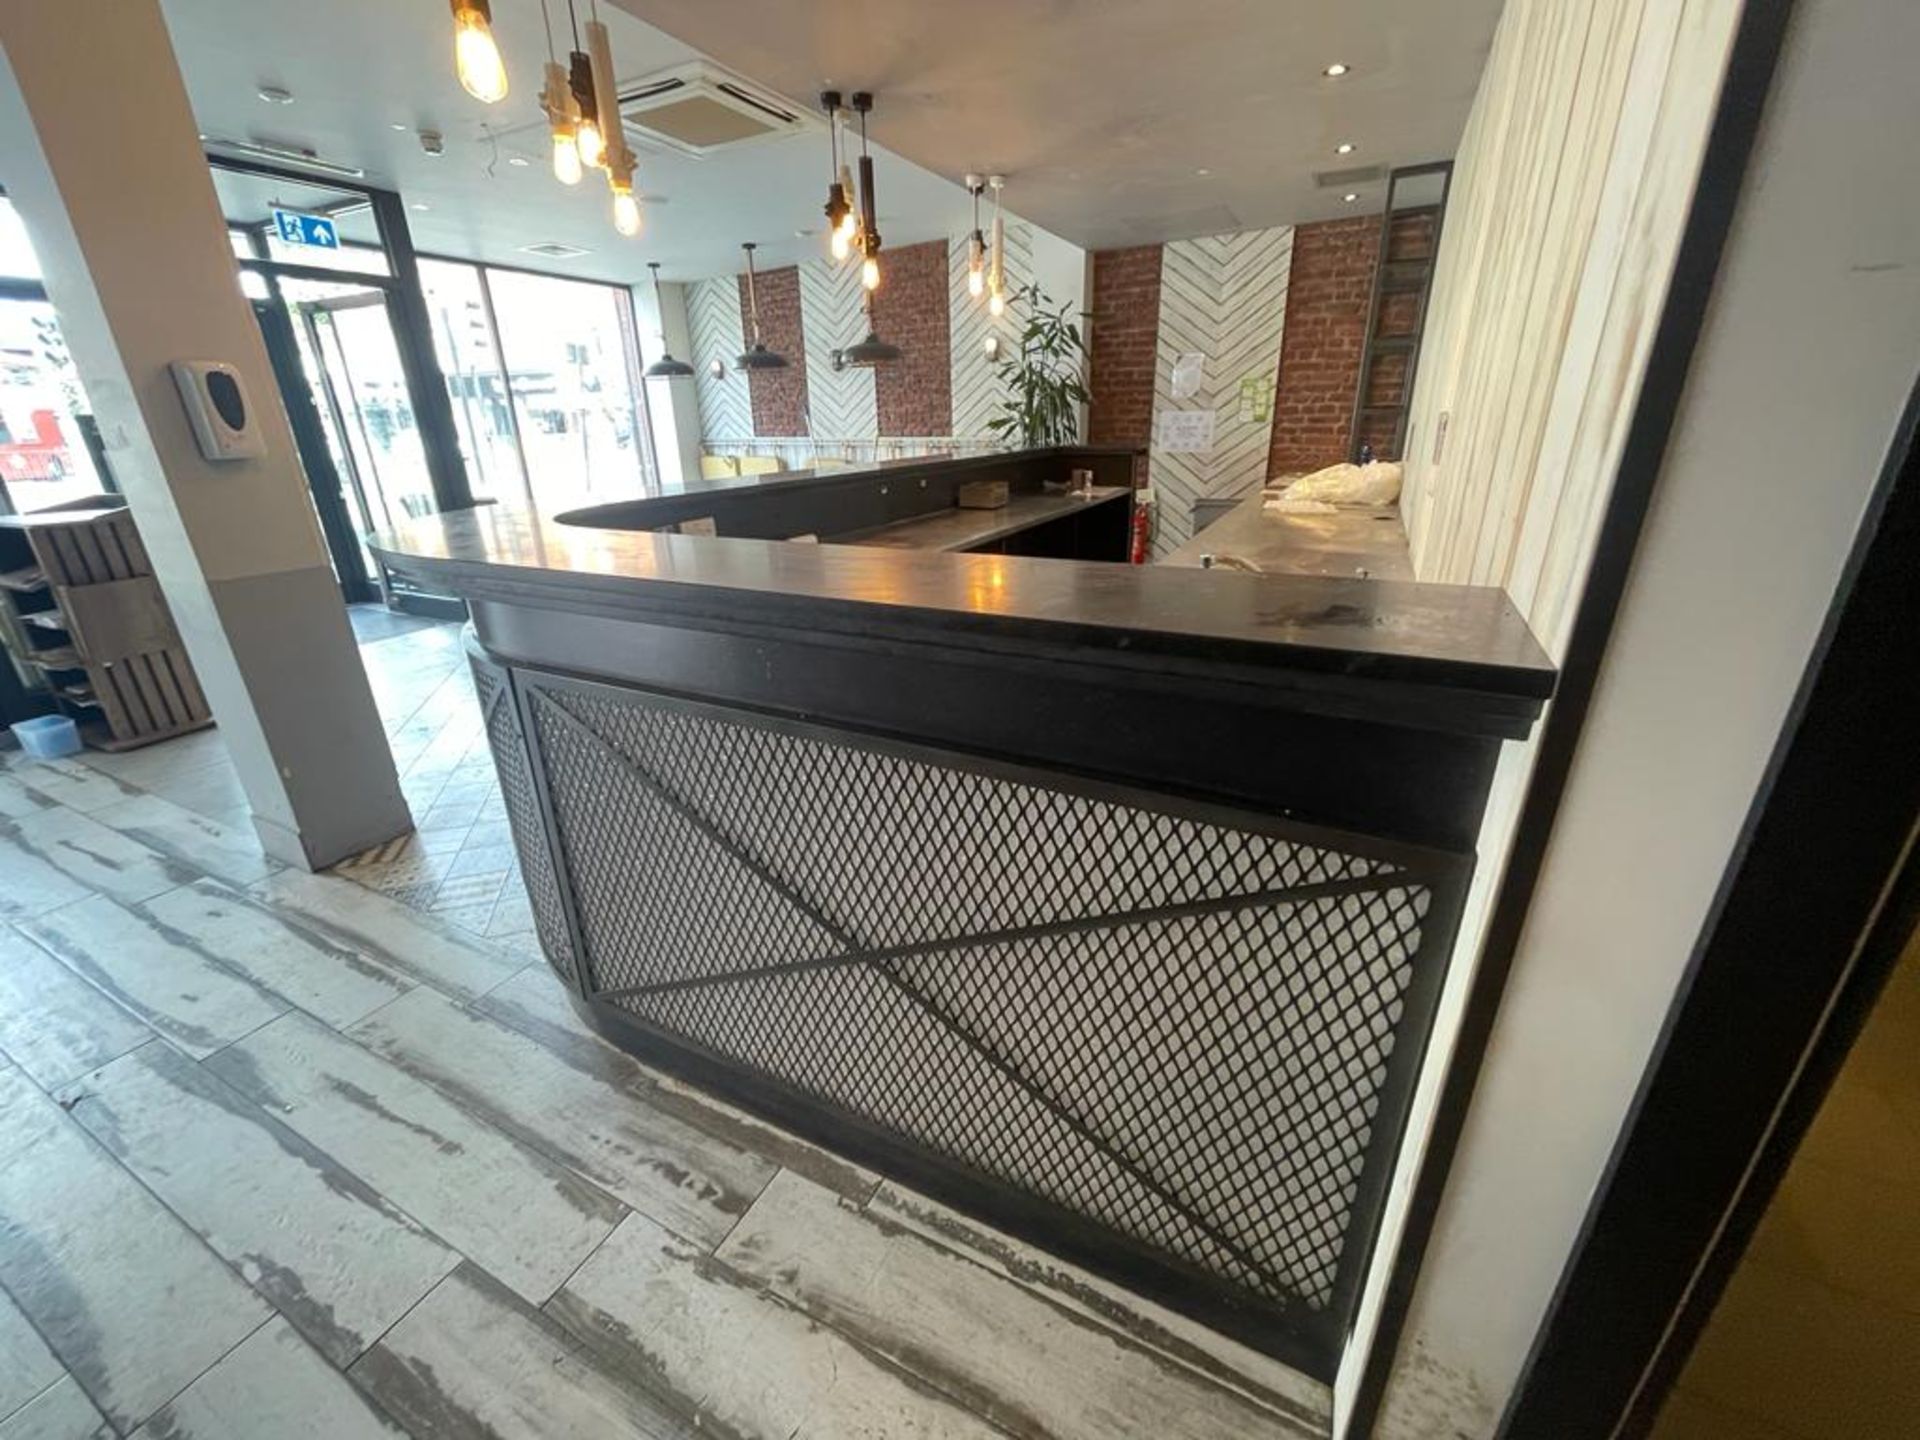 1 x Restaurant Drinks Bar Featuring a Shaped Design, Granite Worktop, Diamond Lattice Fascia - Image 11 of 25